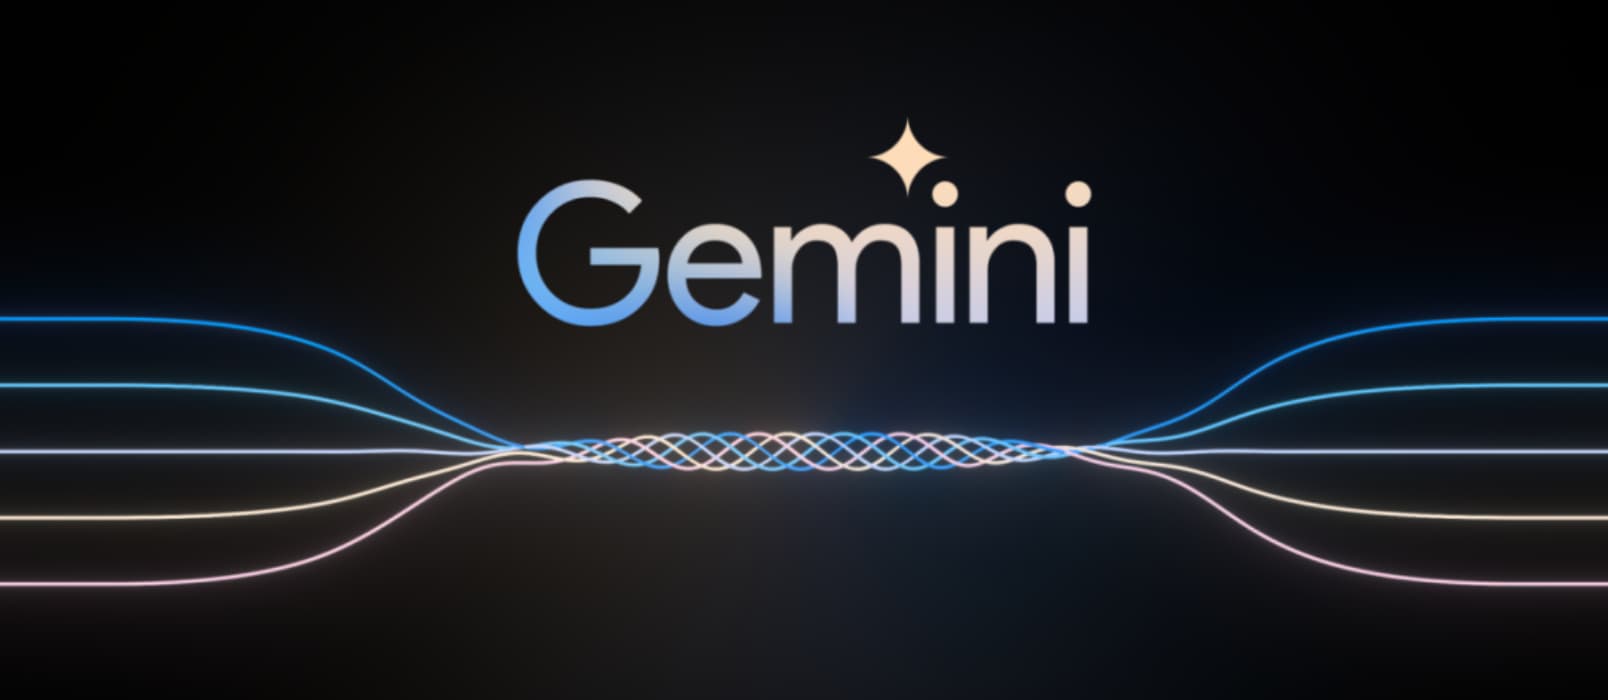 Google 发布了「他们规模最大、能力最强的 AI 模型」 Gemini